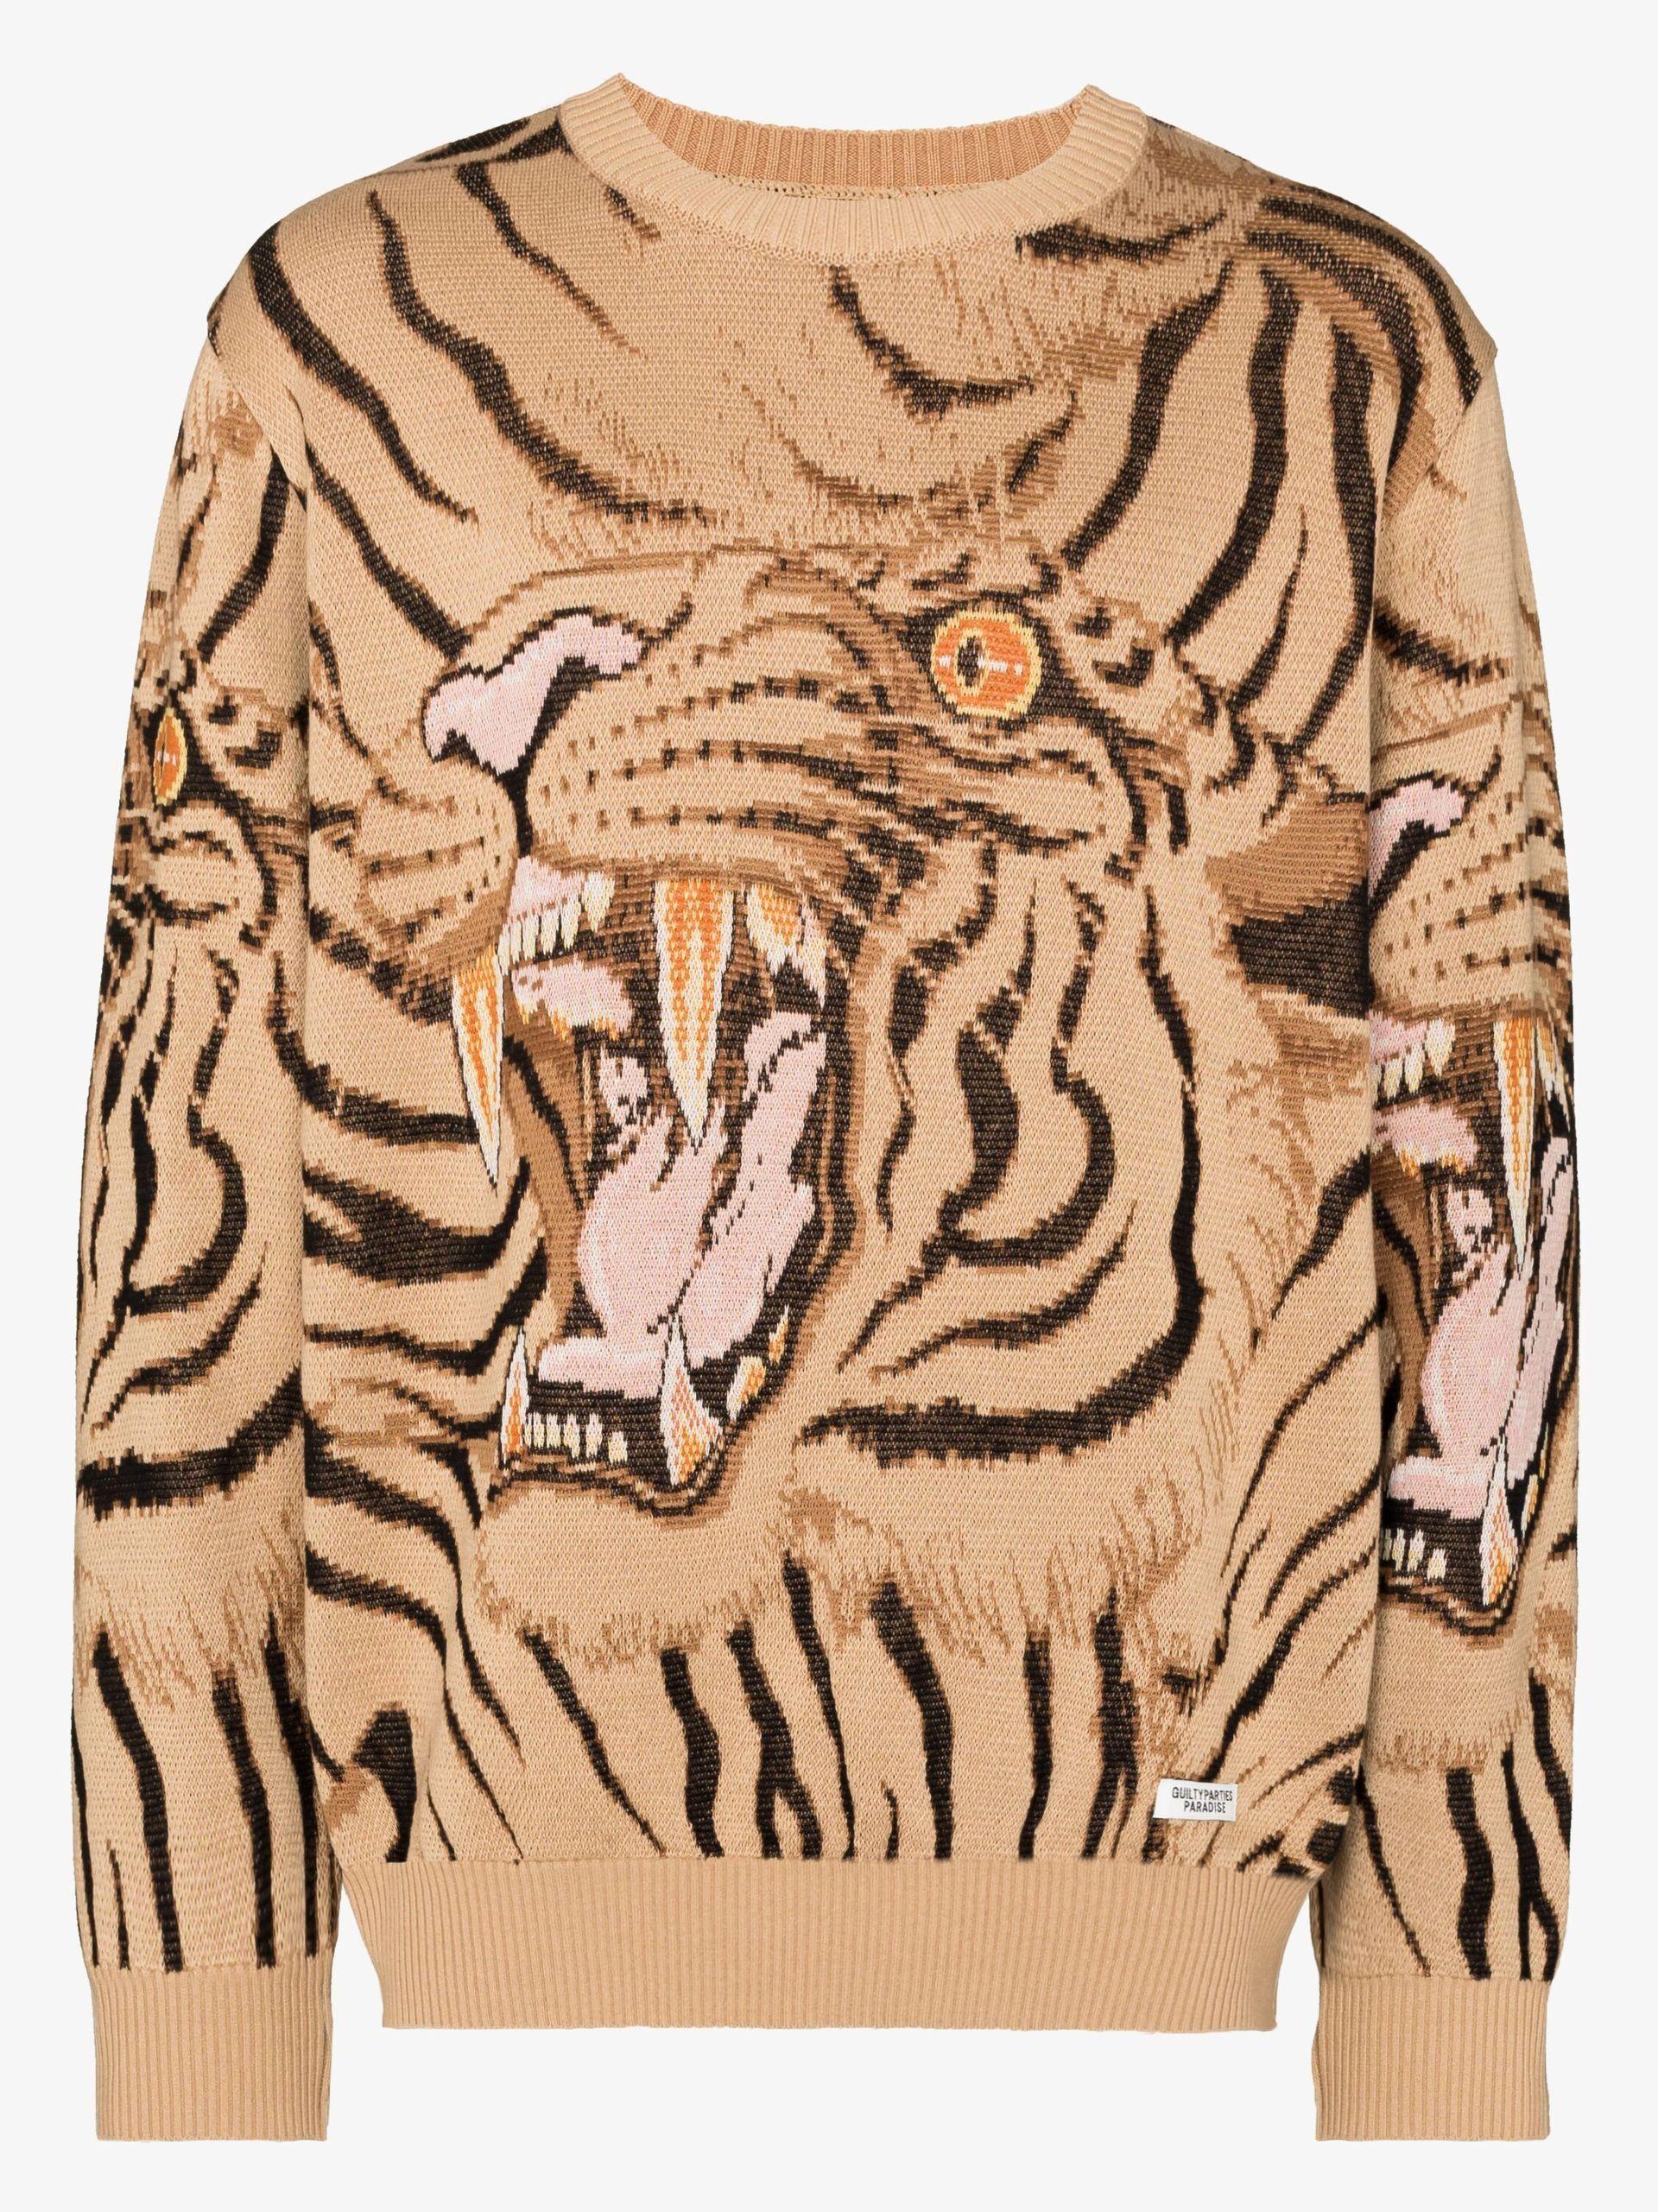 Wacko Maria X Tim Lehi Tiger Intarsia Cotton Sweater - Men's 